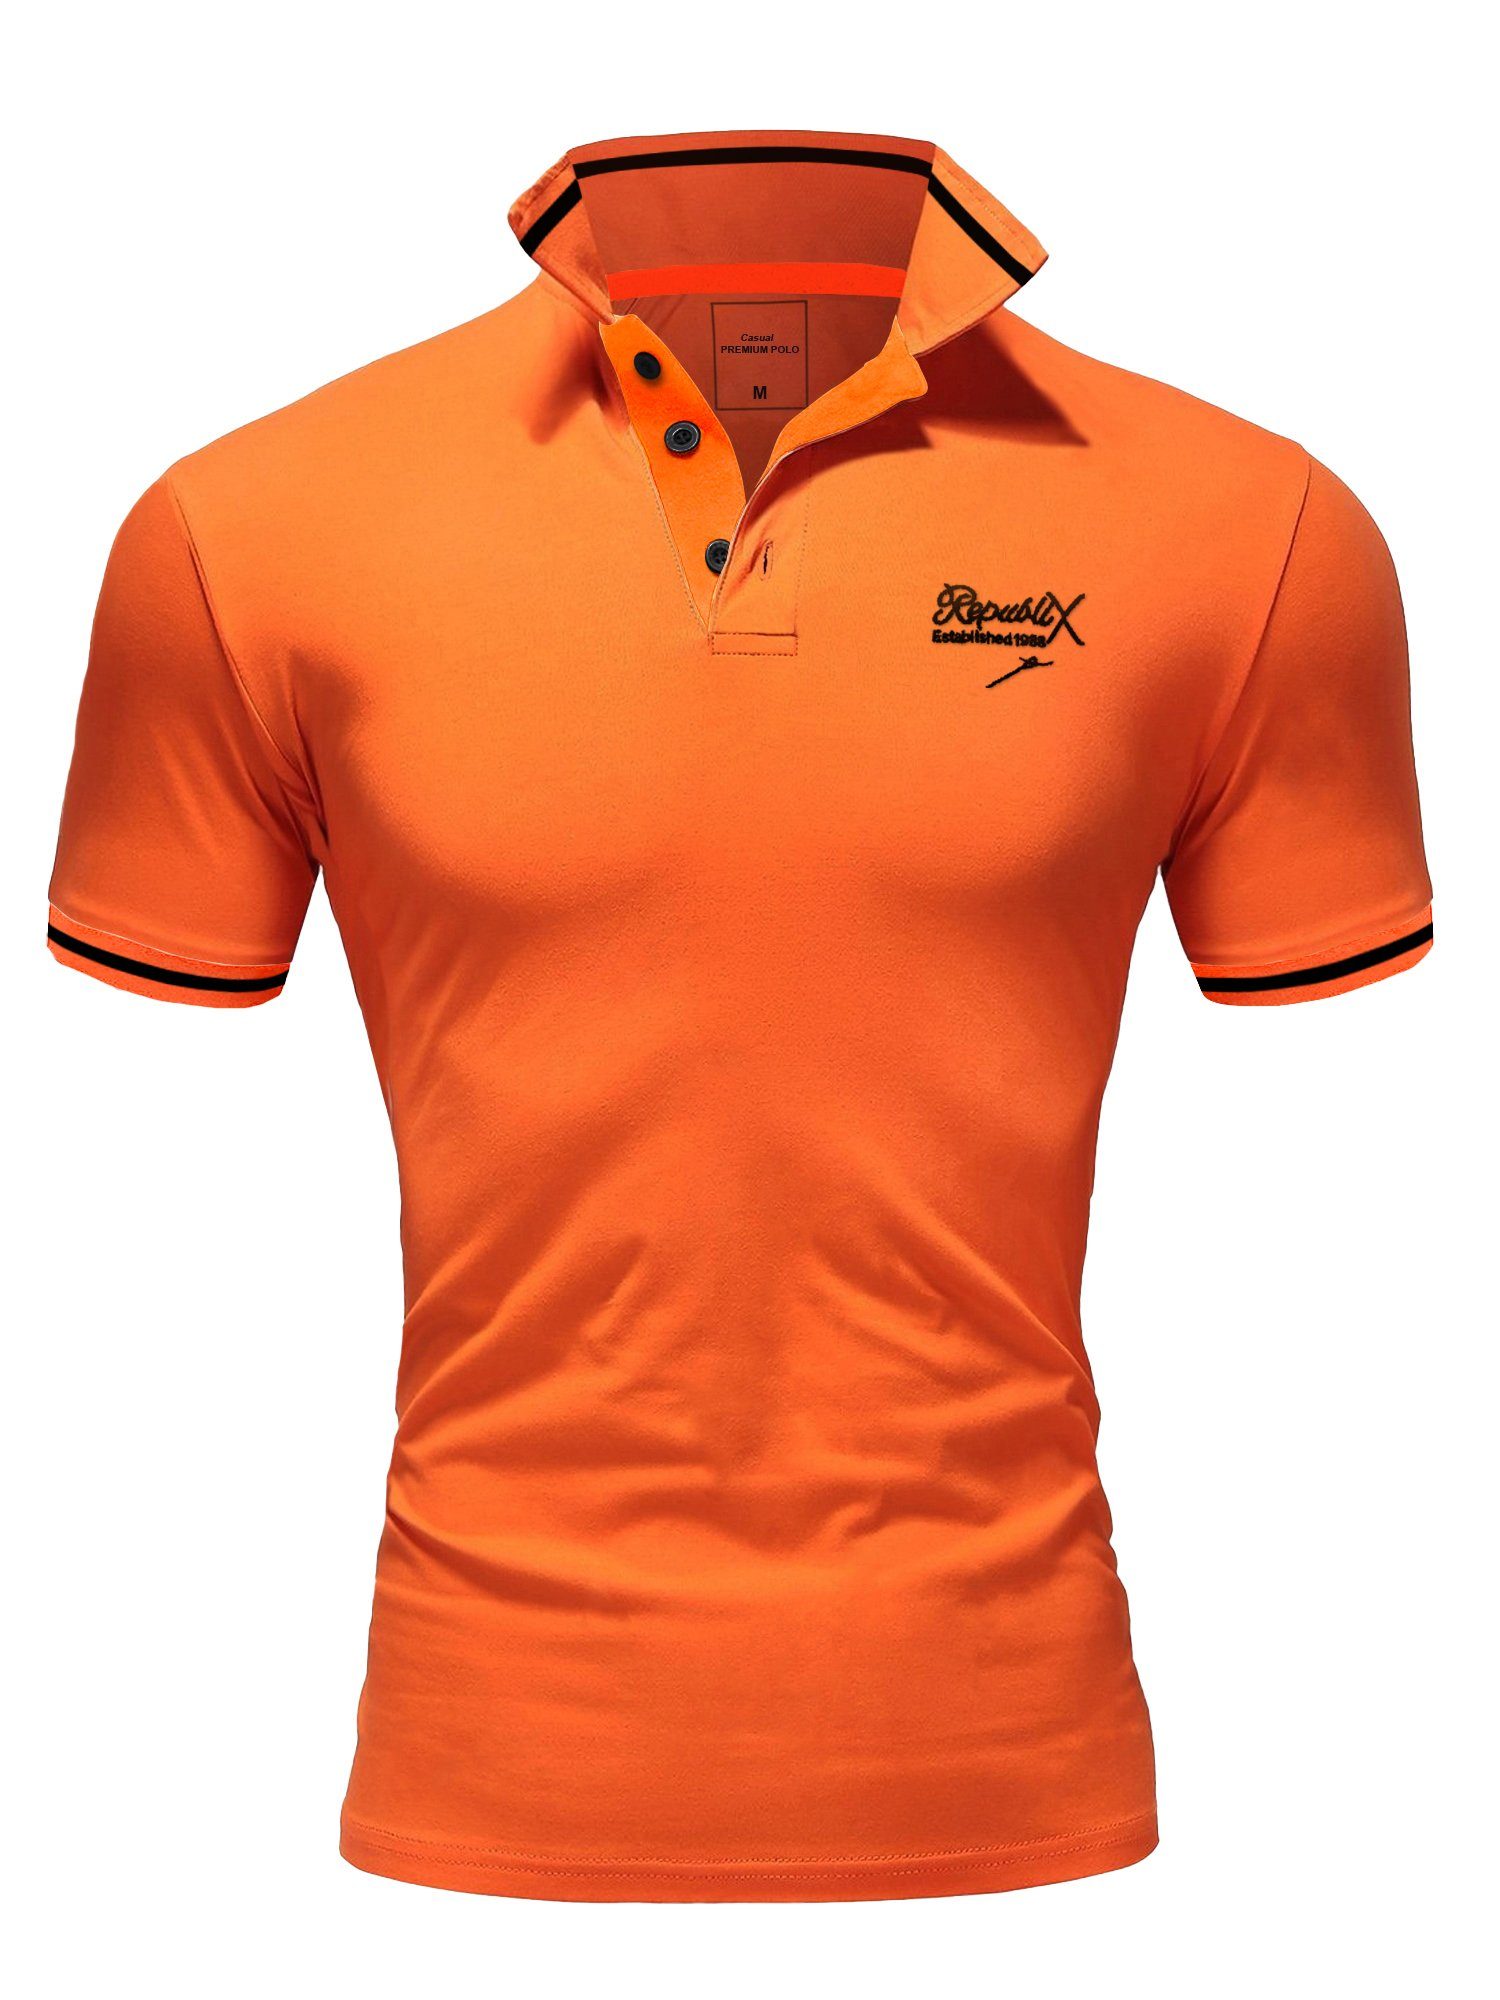 Poloshirt Kurzarm Orange/Schwarz Herren GABRIEL REPUBLIX Polo Kontrast Basic Hemd